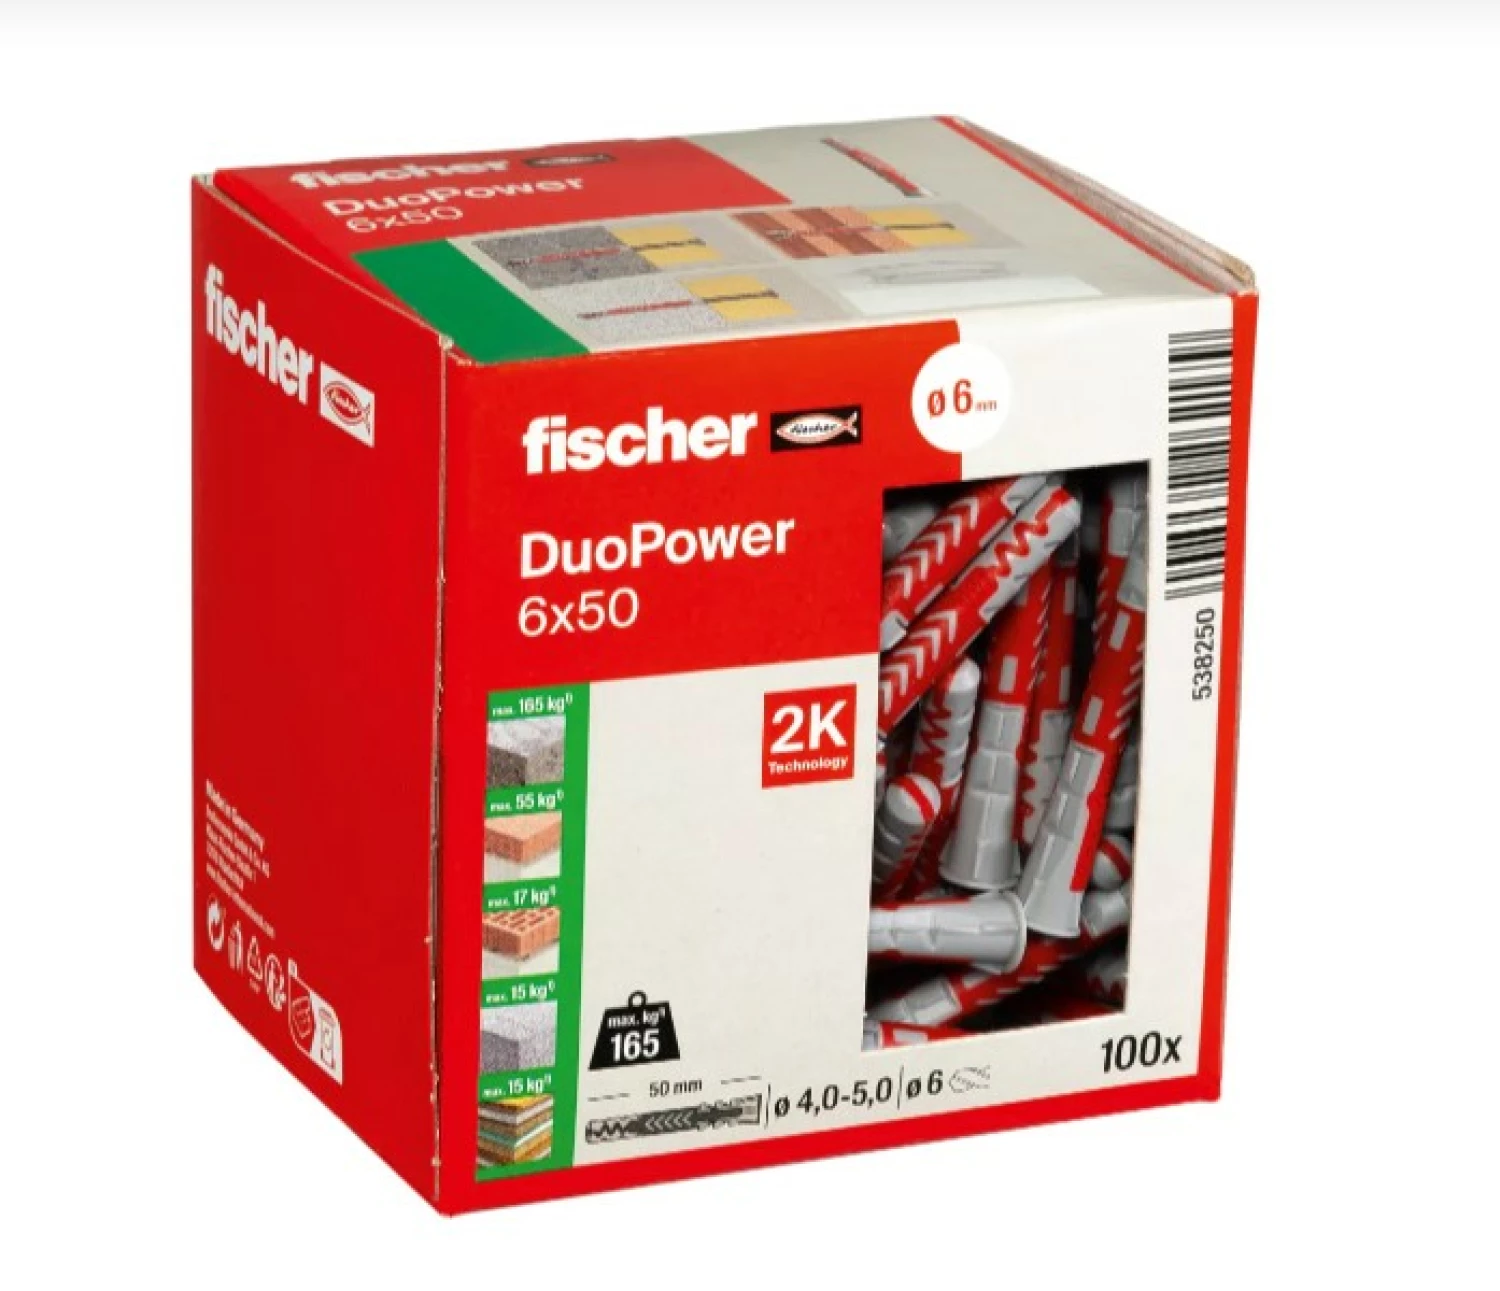 Fischer 538250 DuoPower Universele pluggen - 6 x 50mm (100st)-image